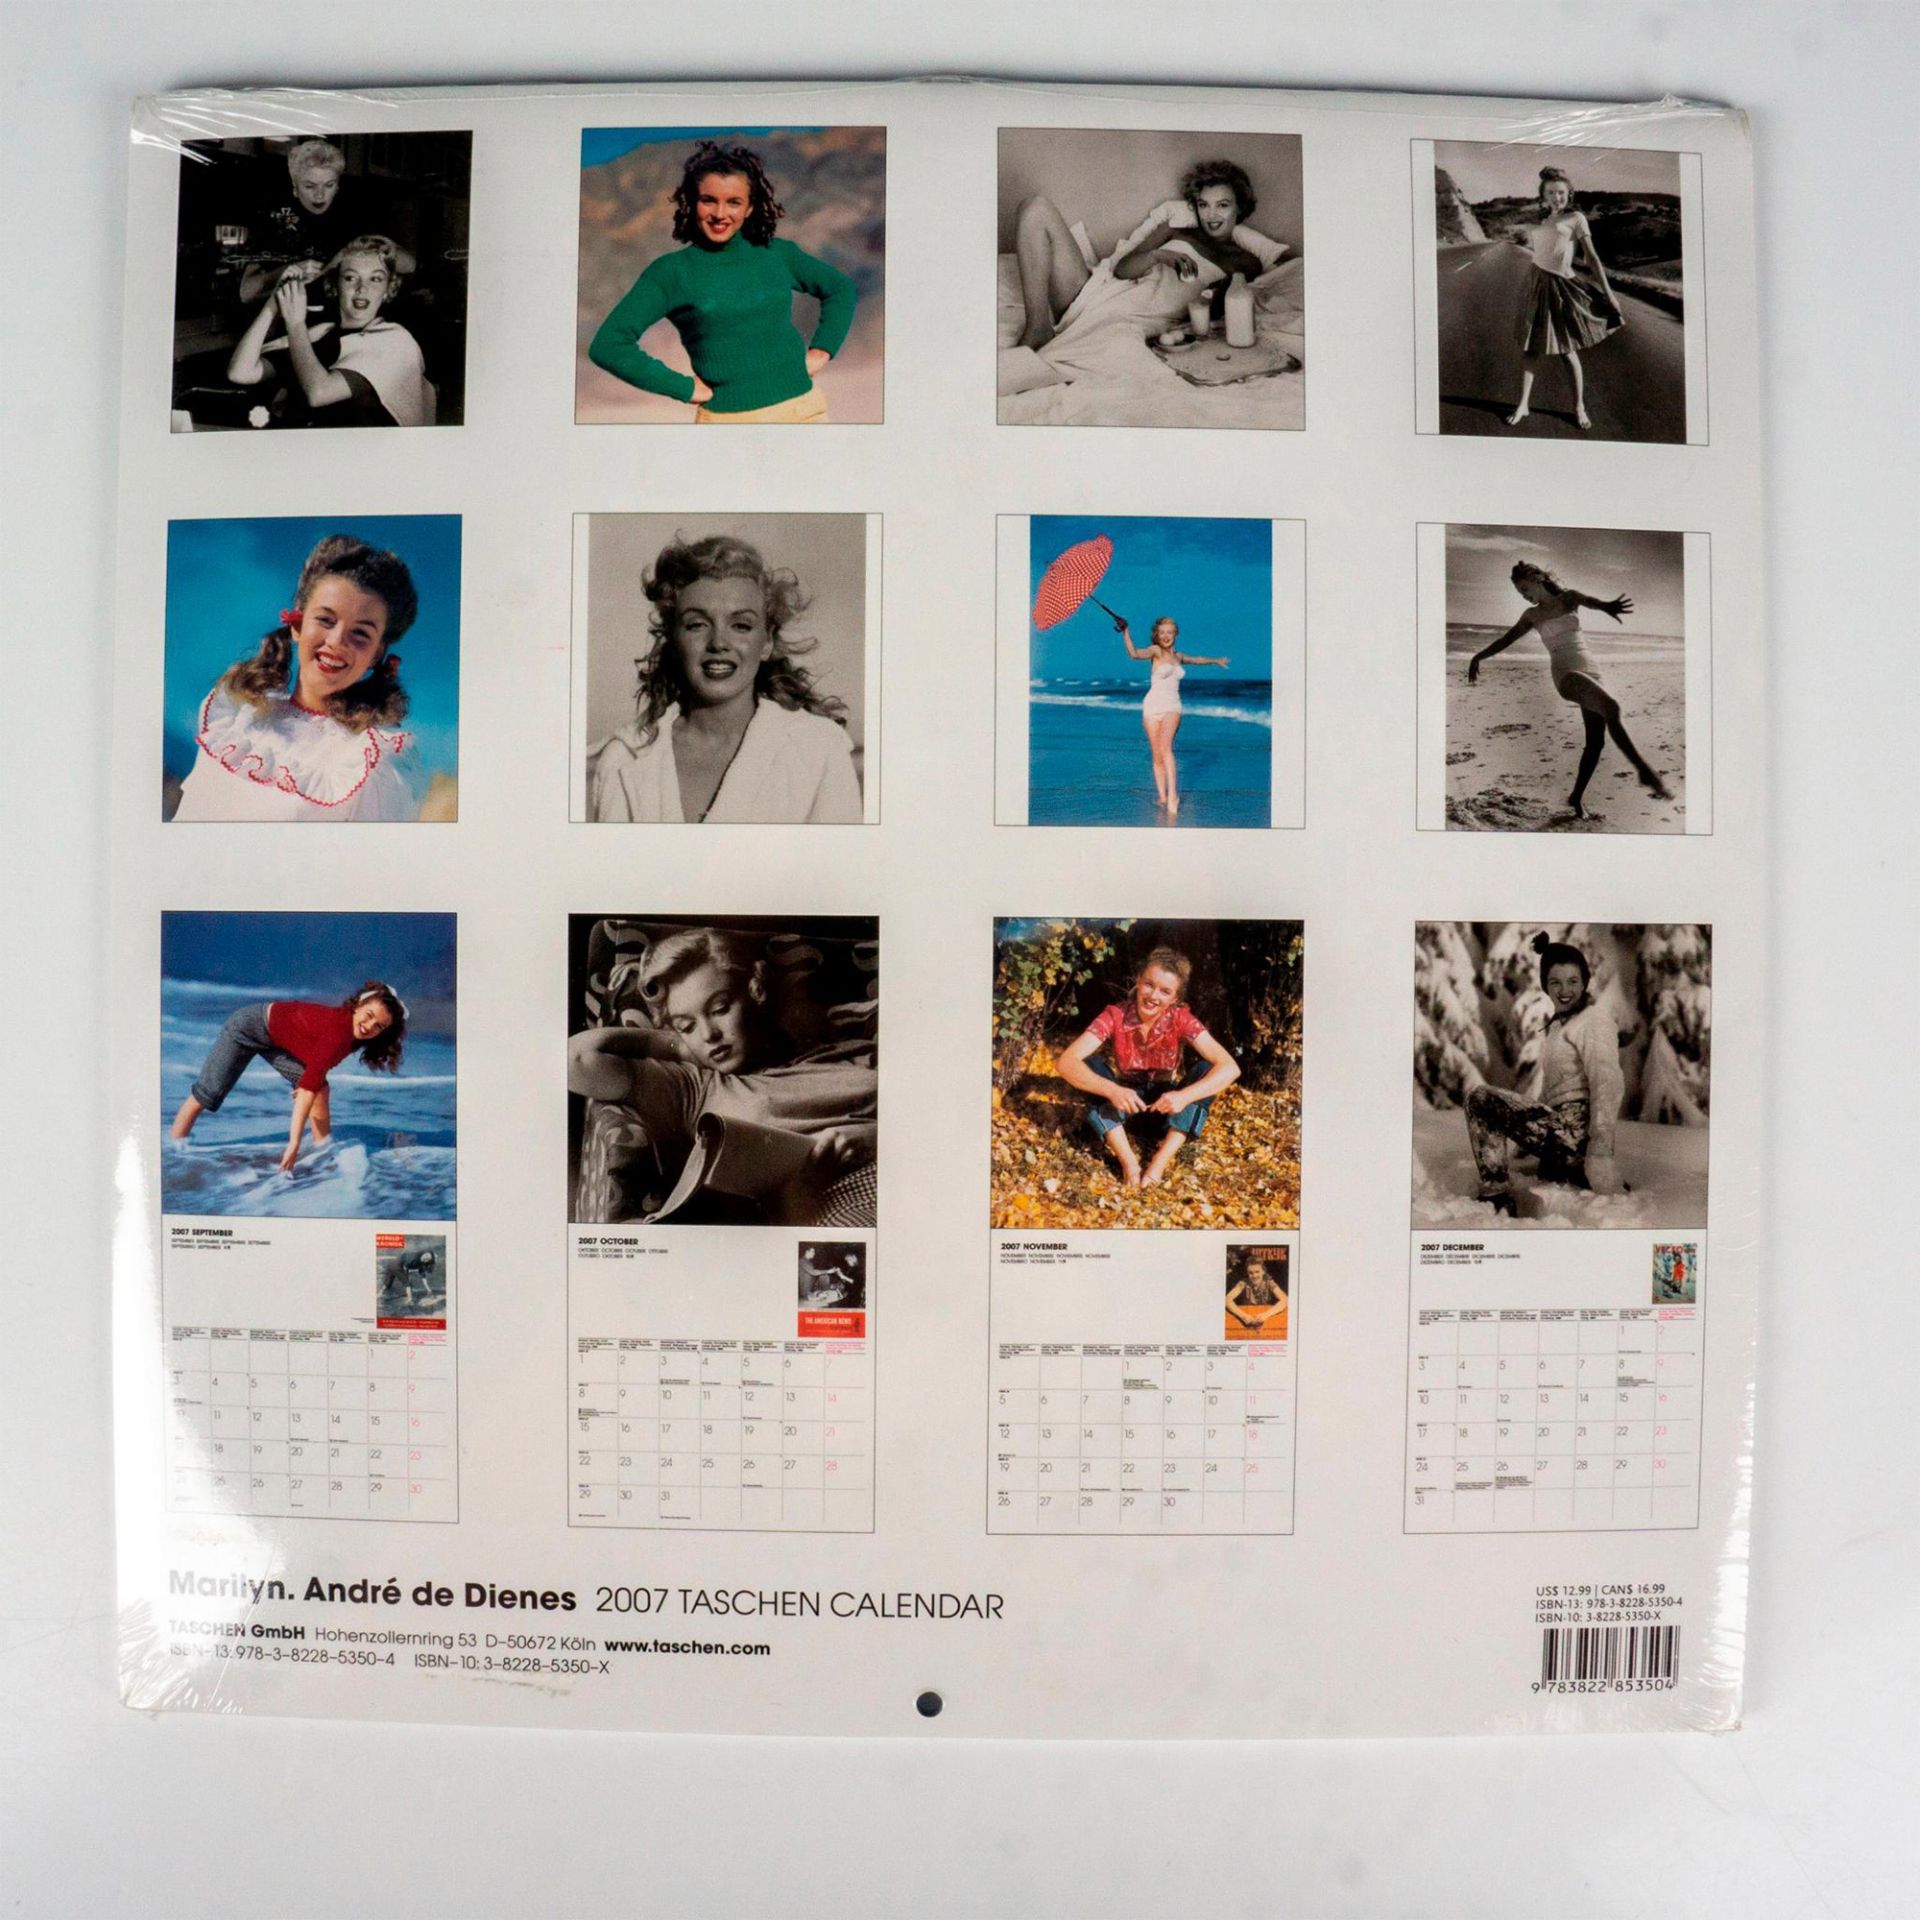 Taschen Calendar, Marilyn by Andre de Dienes 2007 - Bild 2 aus 2